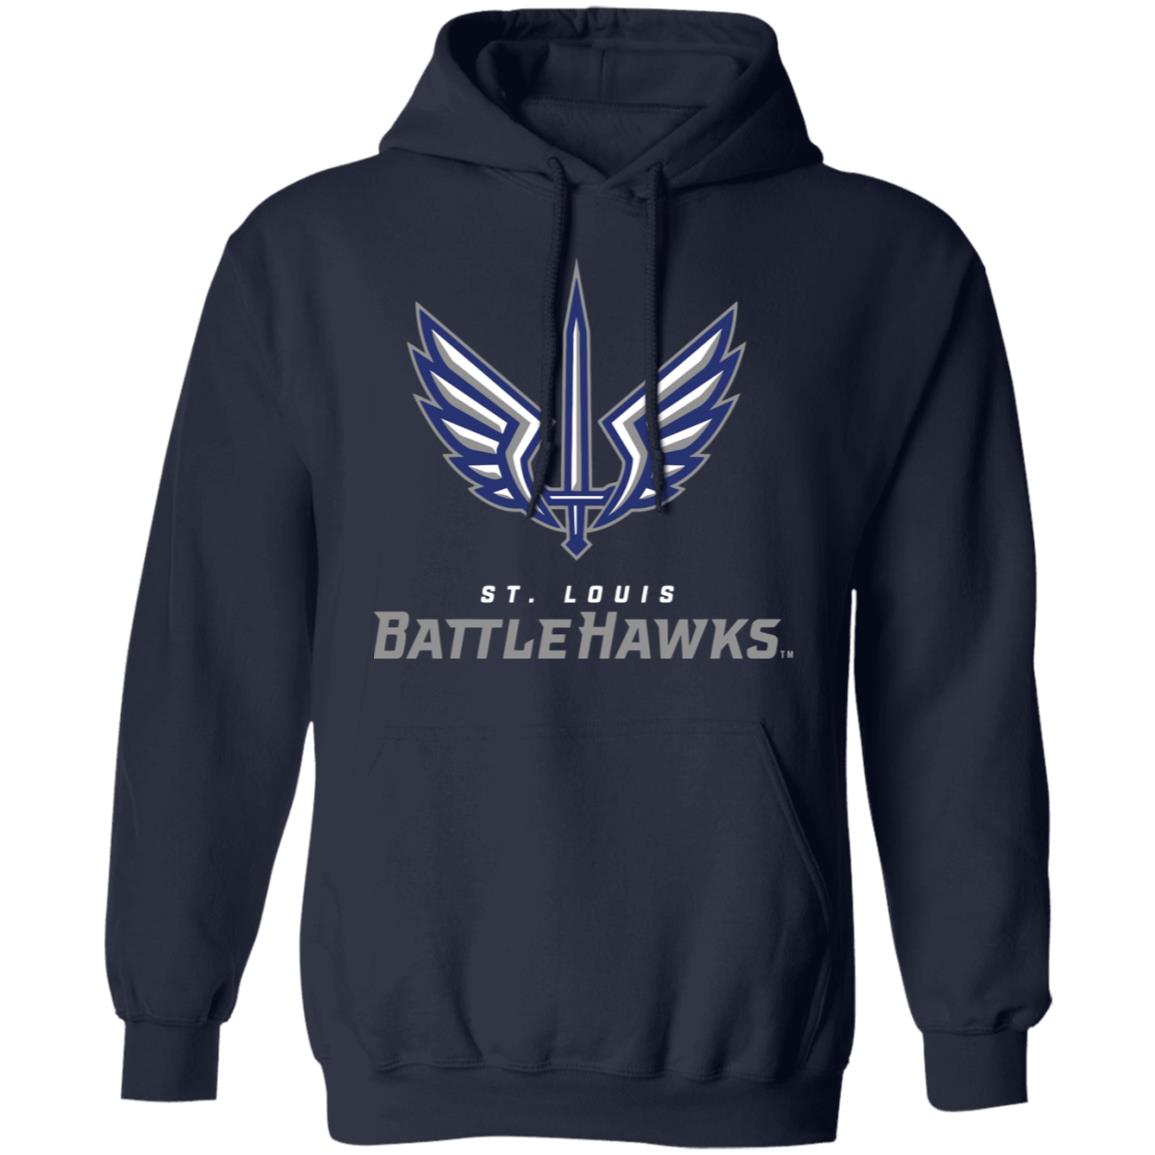 Battlehawks Visor – XFL Shop